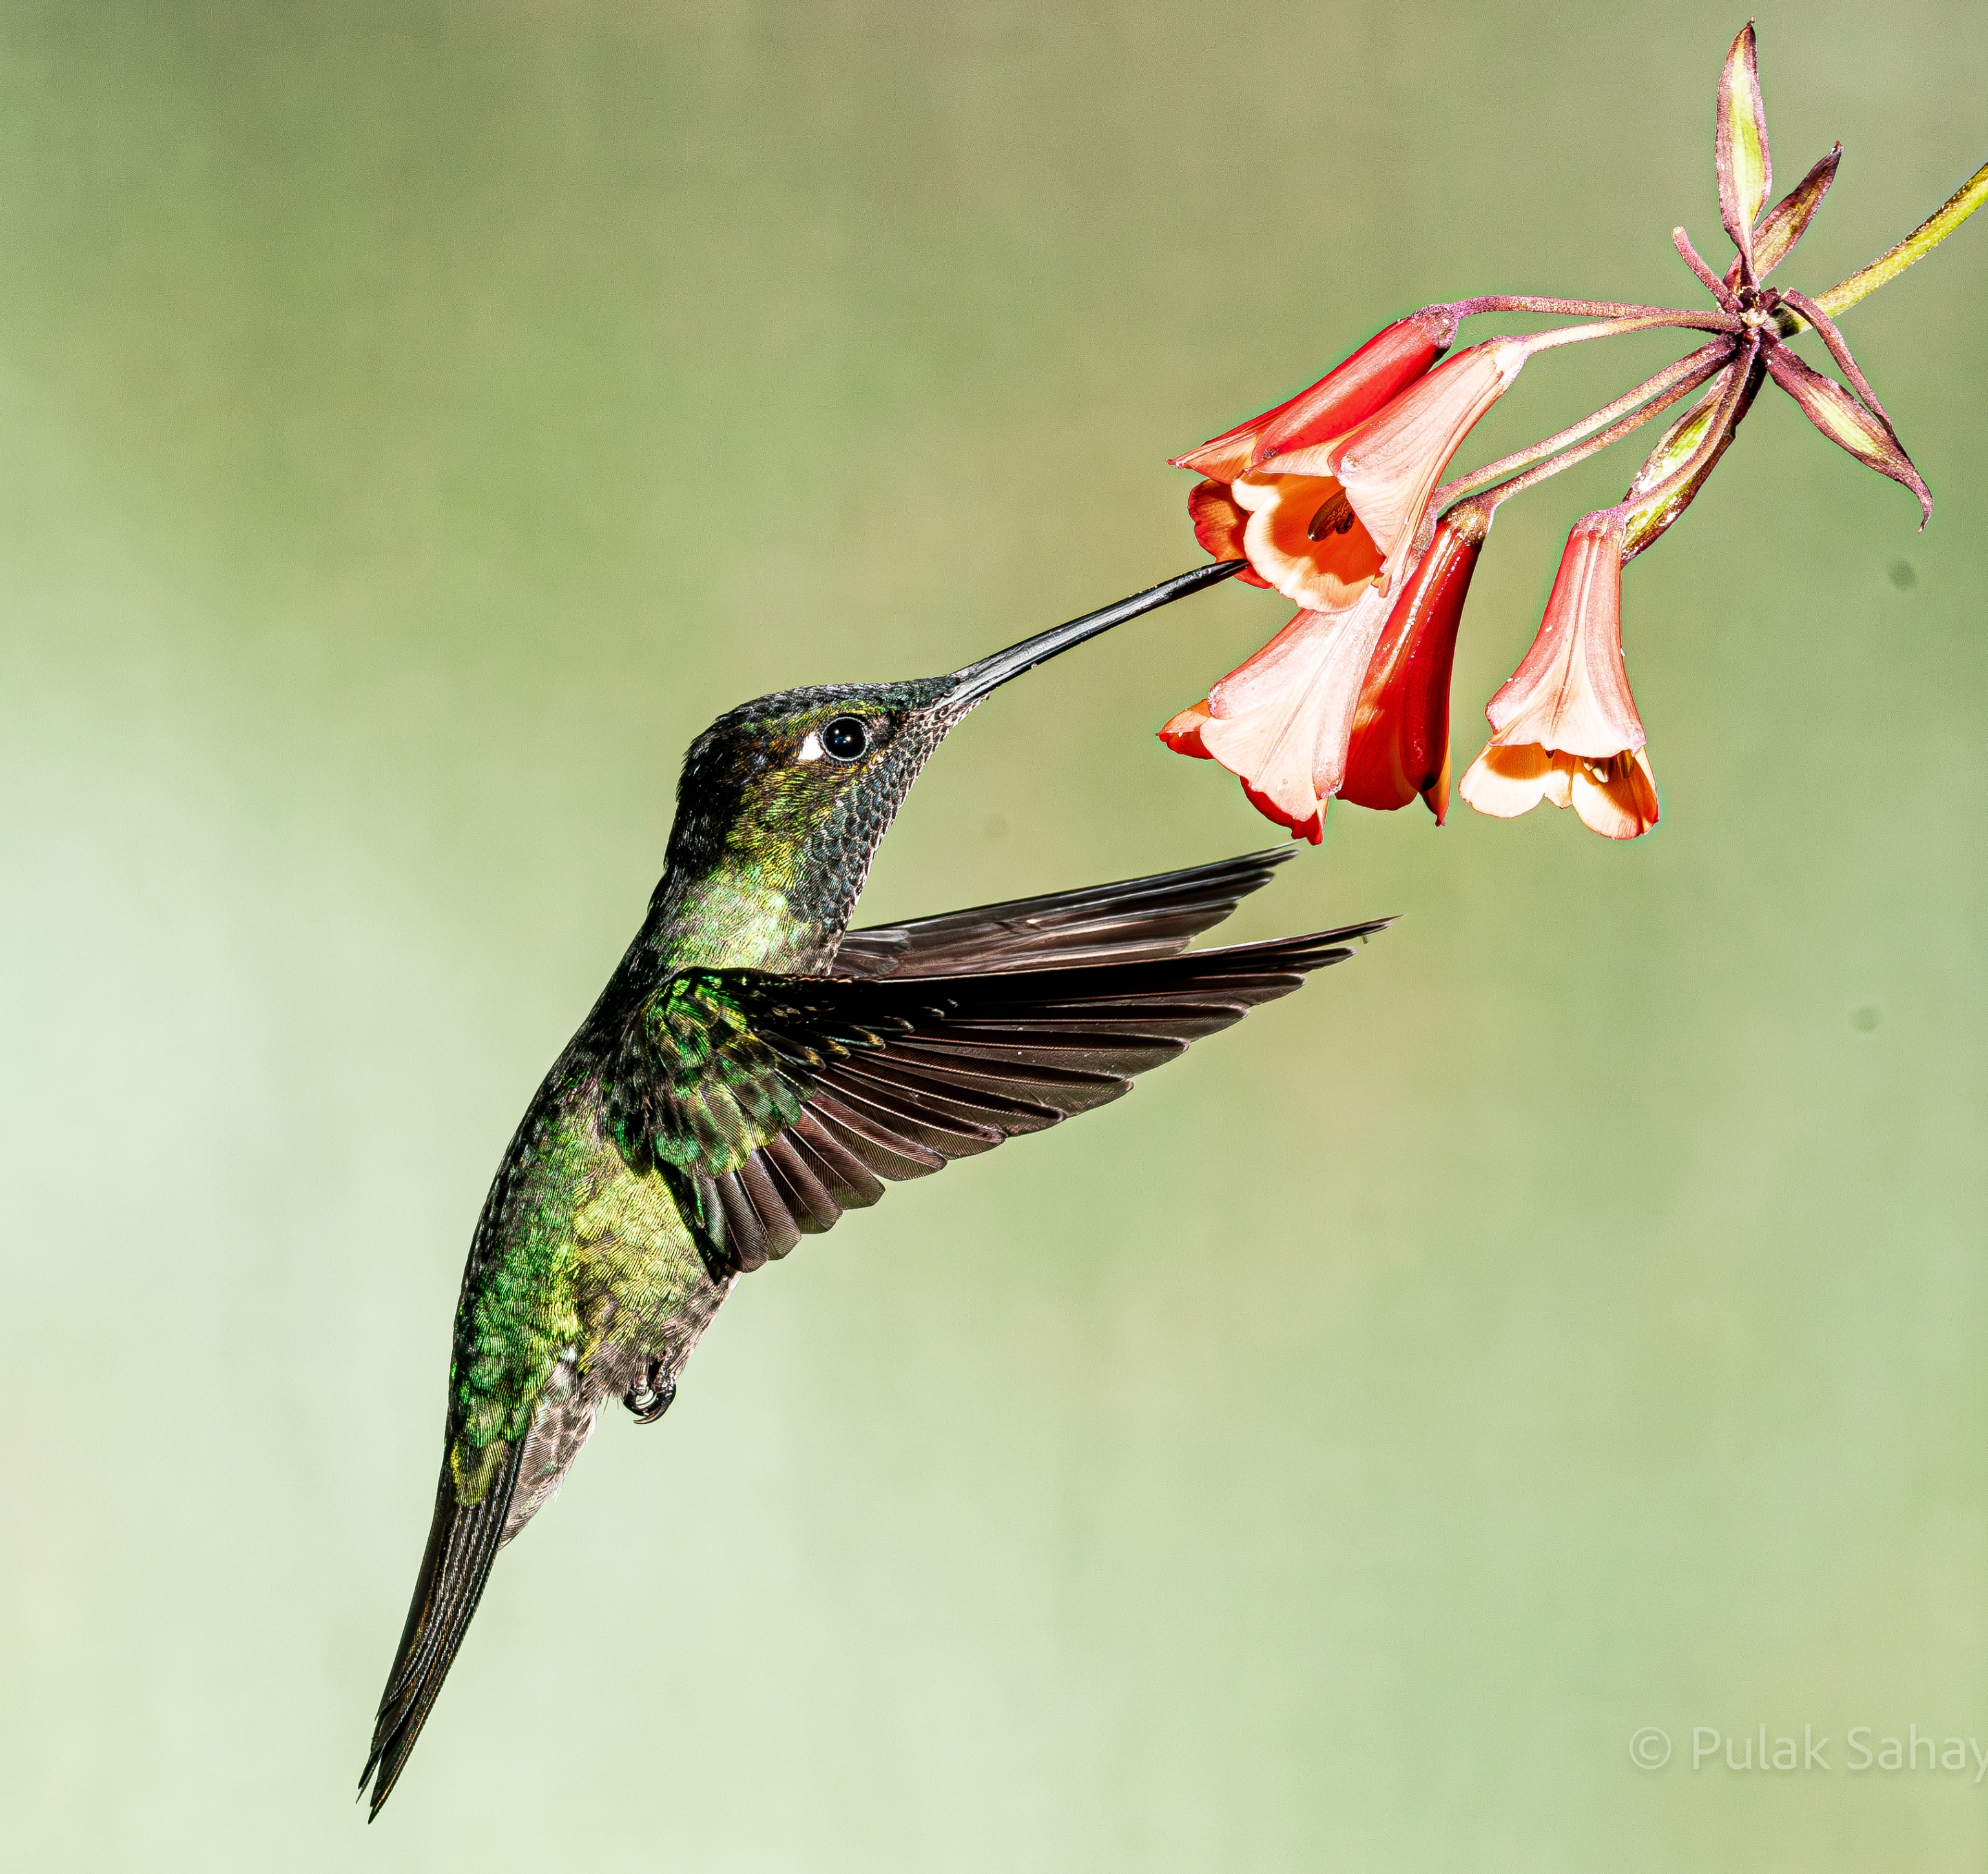 Hummingbird having a feed